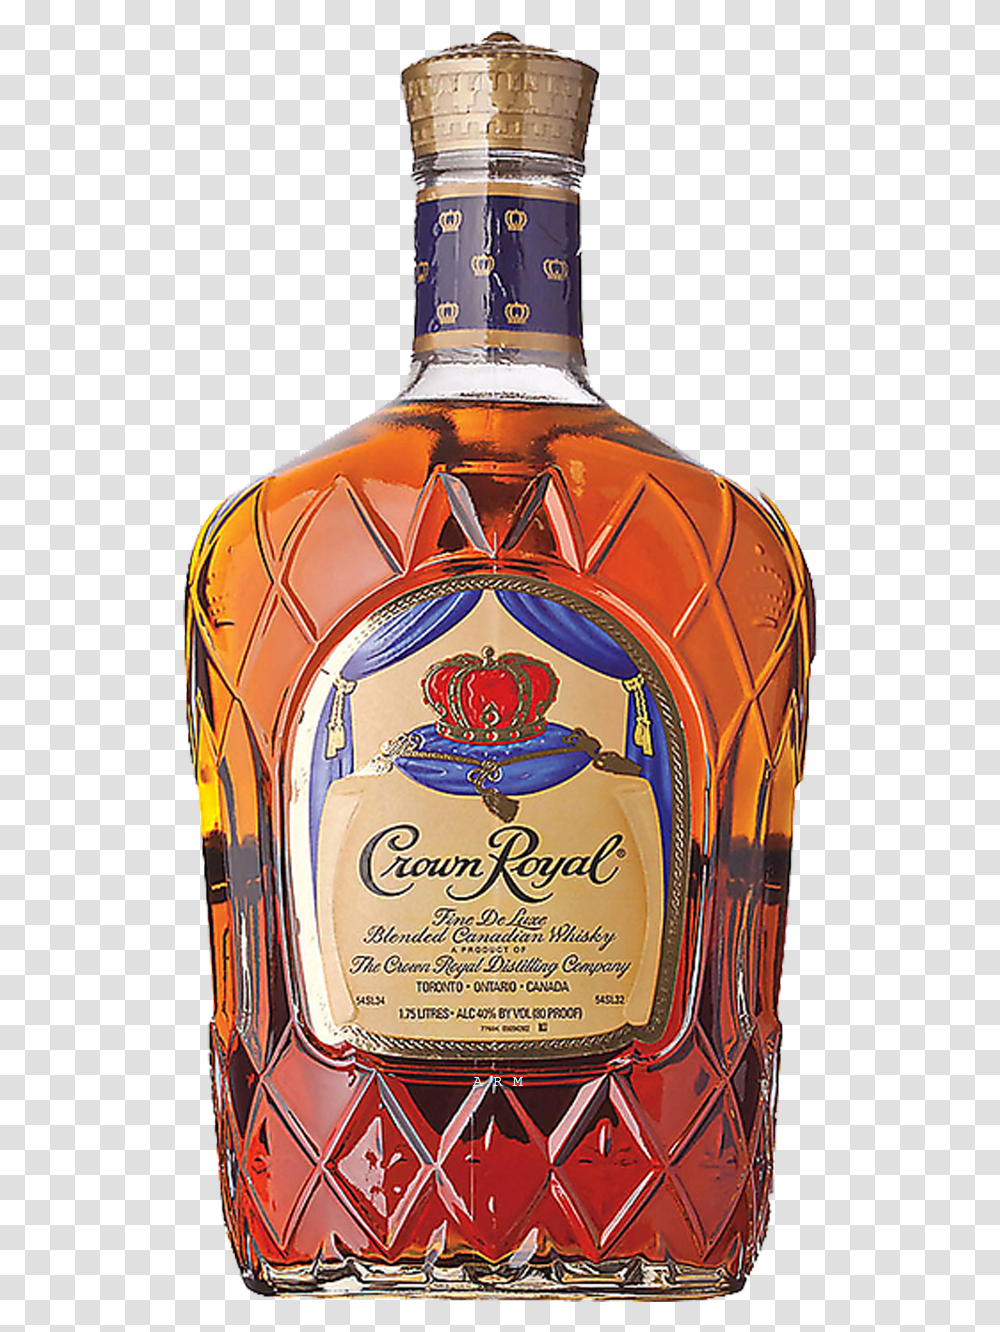 Crown Royal Bottle Sizes, Liquor, Alcohol, Beverage, Drink Transparent Png